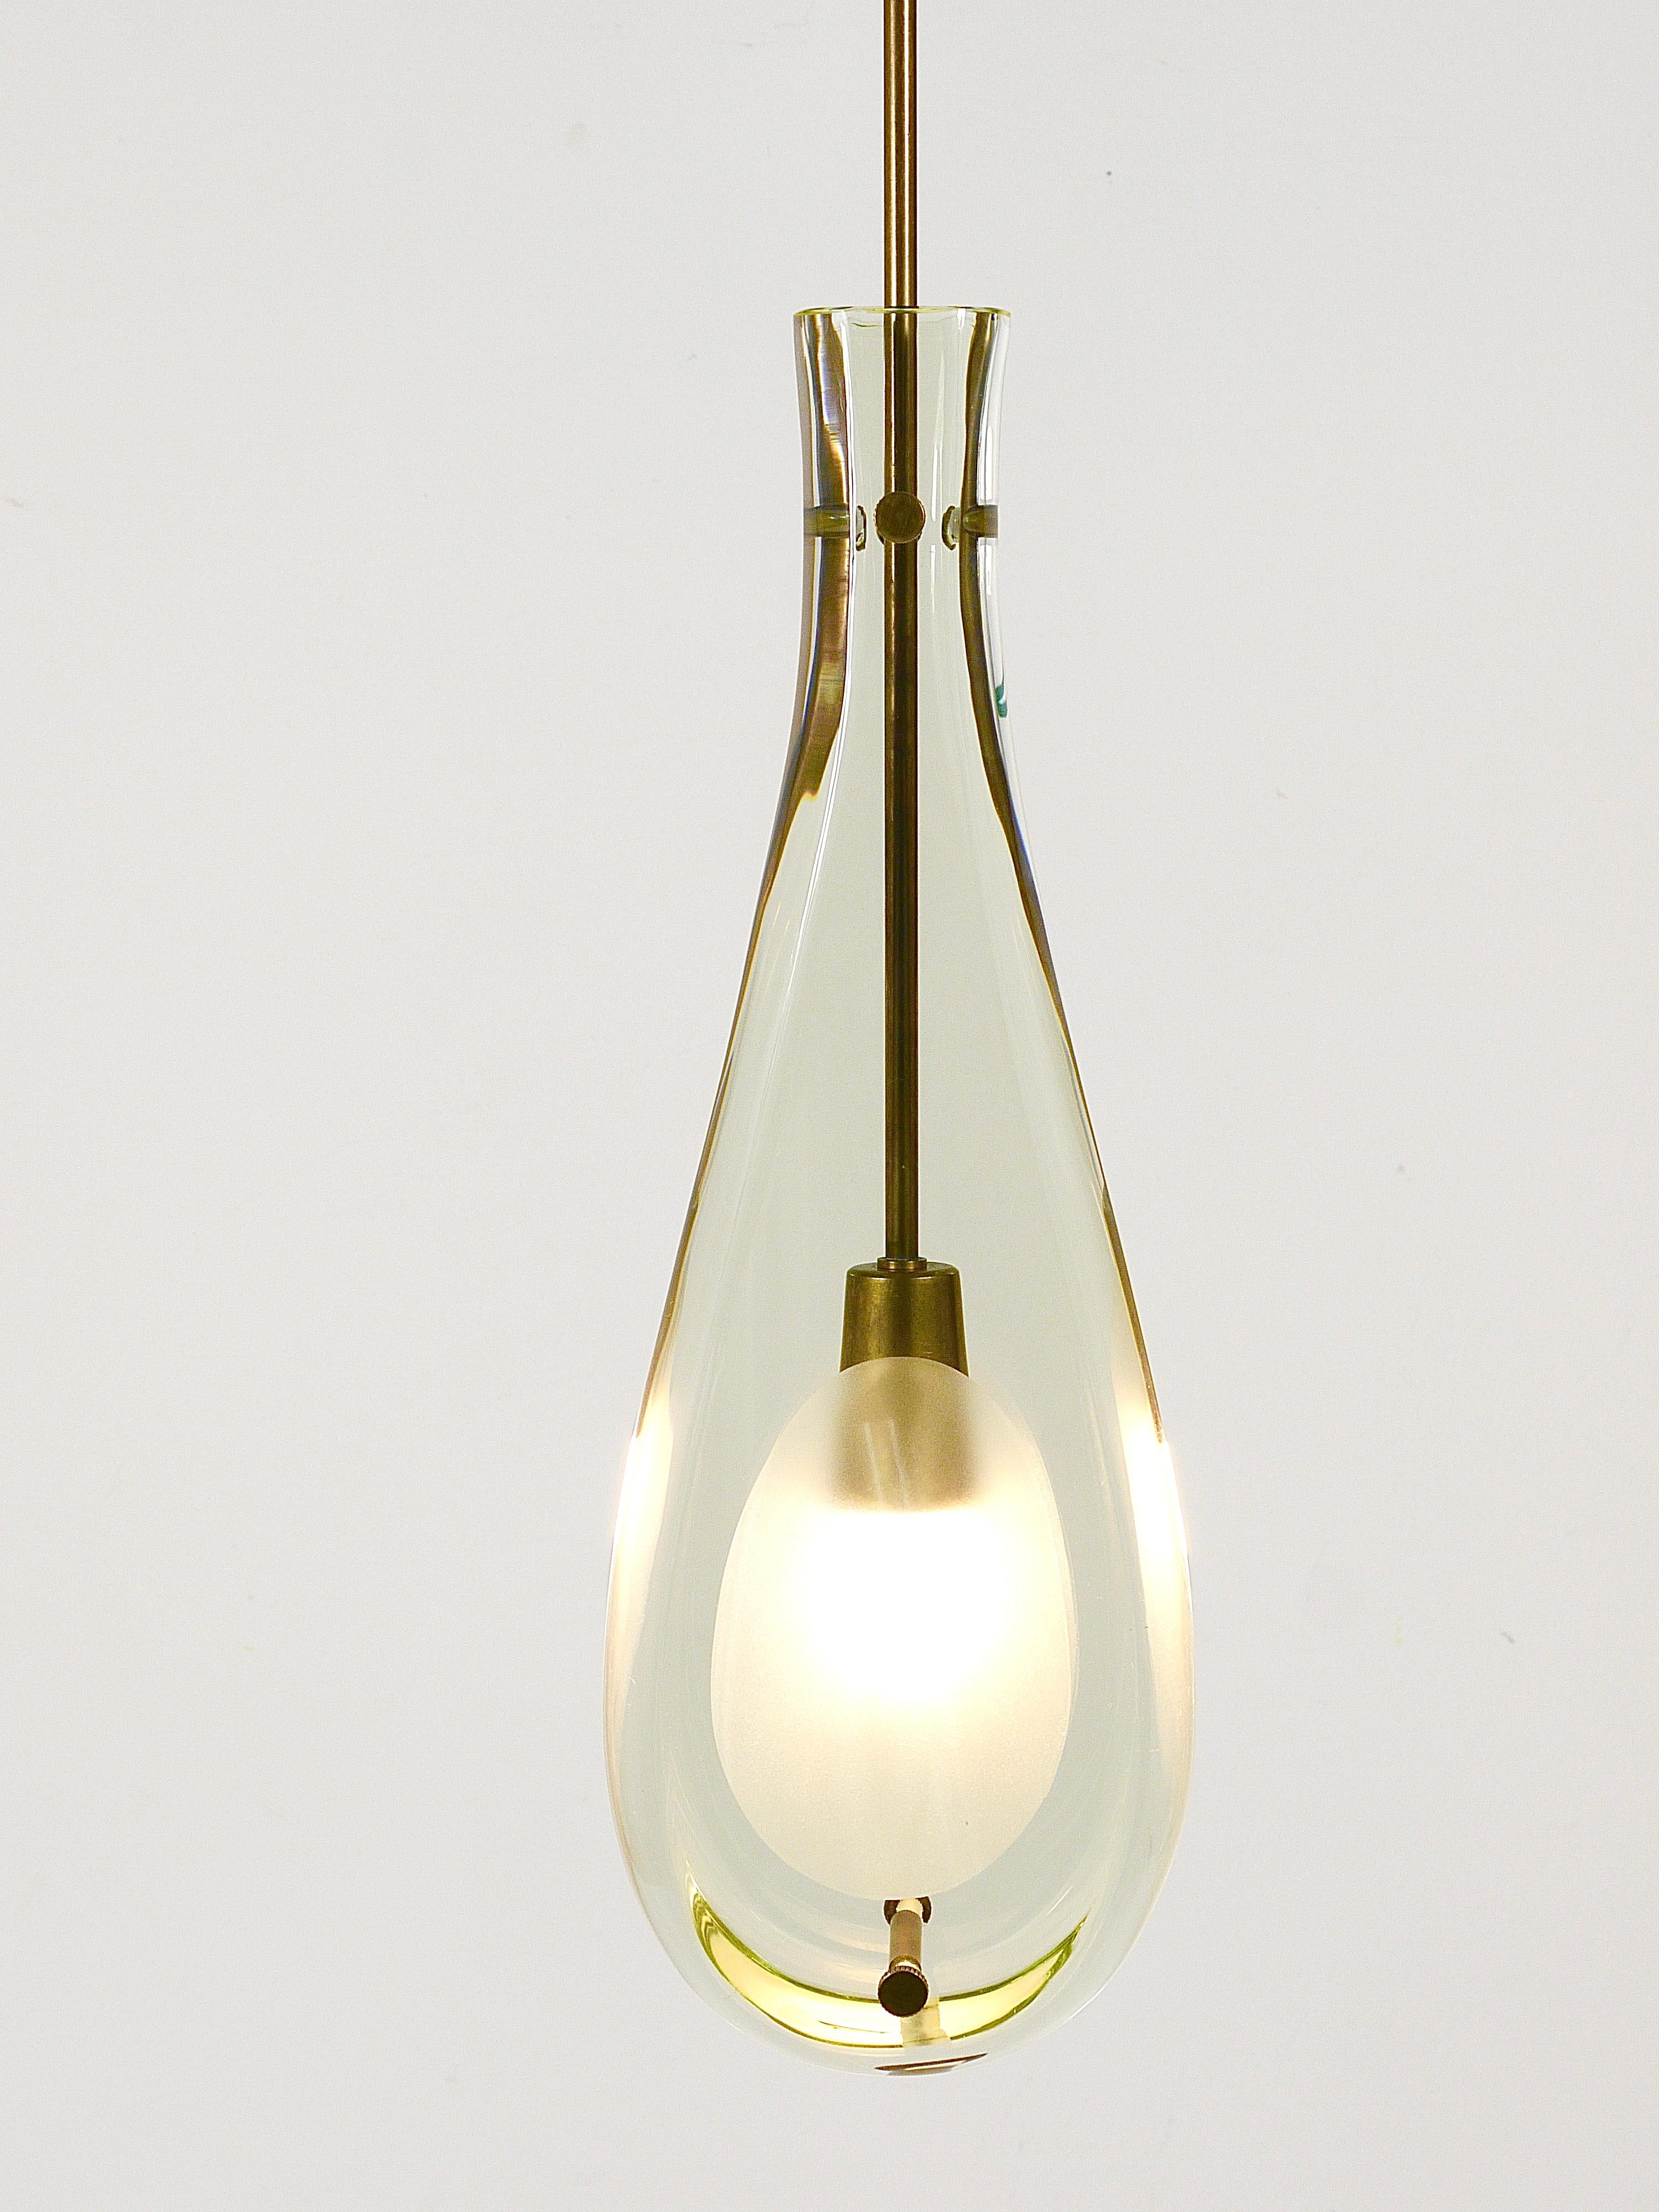 Max Ingrad For Fontana Arte Drop Pendant Lamp, Model 2259, Italy, 1960s For Sale 2